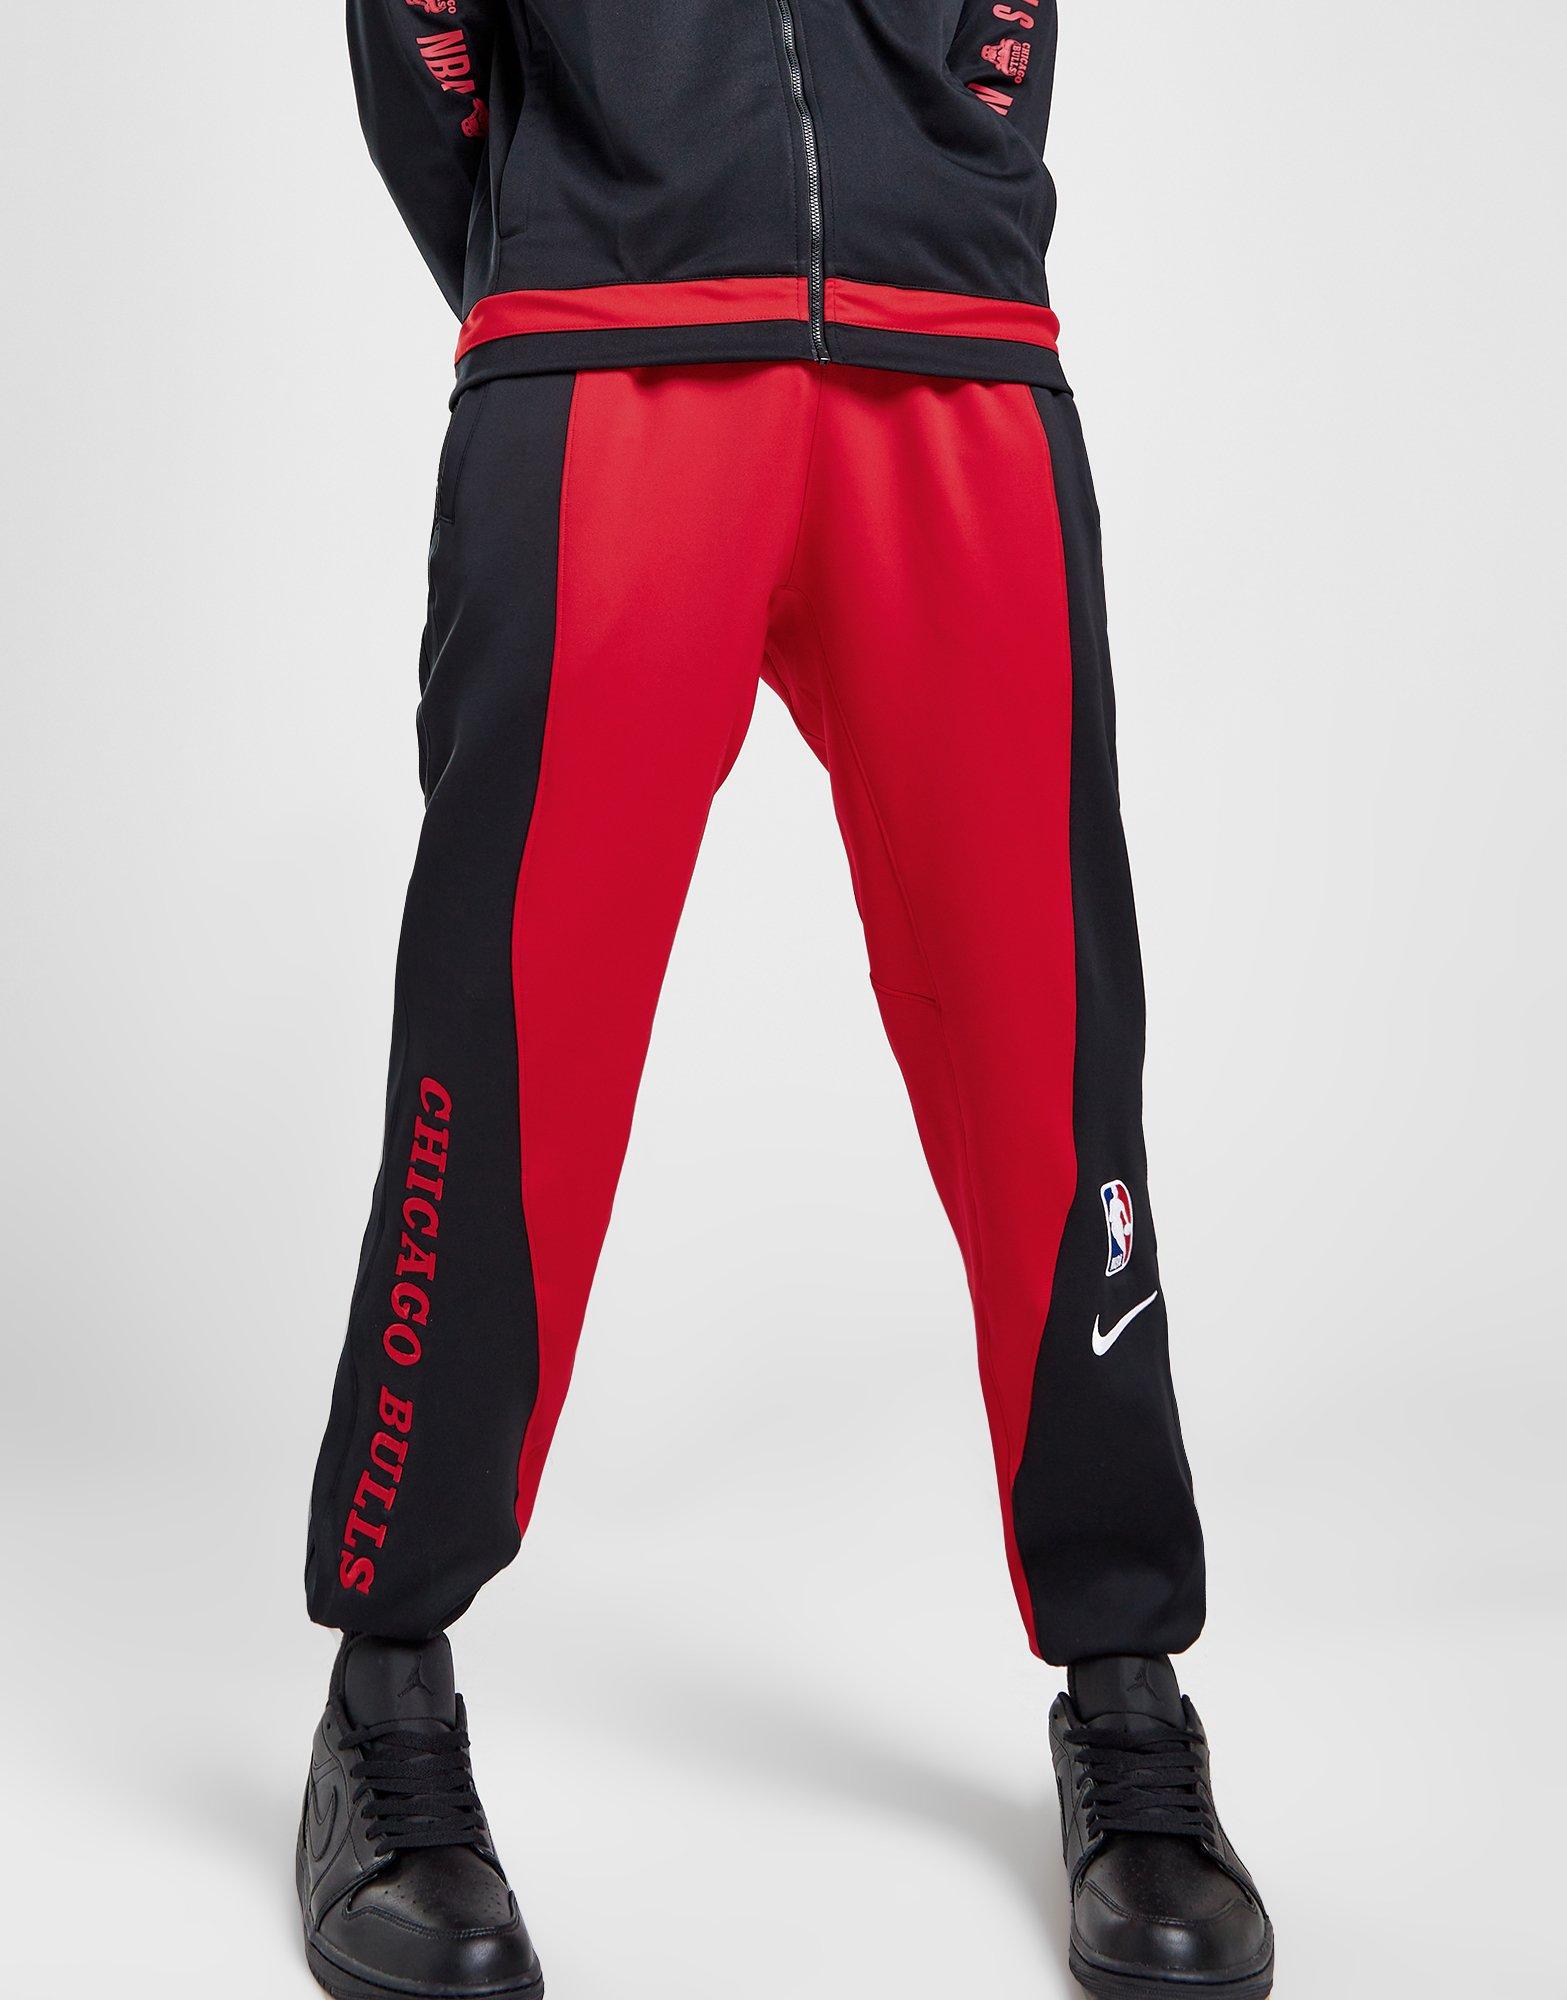 Nike NBA Chicago Bulls Thermaflex Showtime Pants University Red/Black/White/White